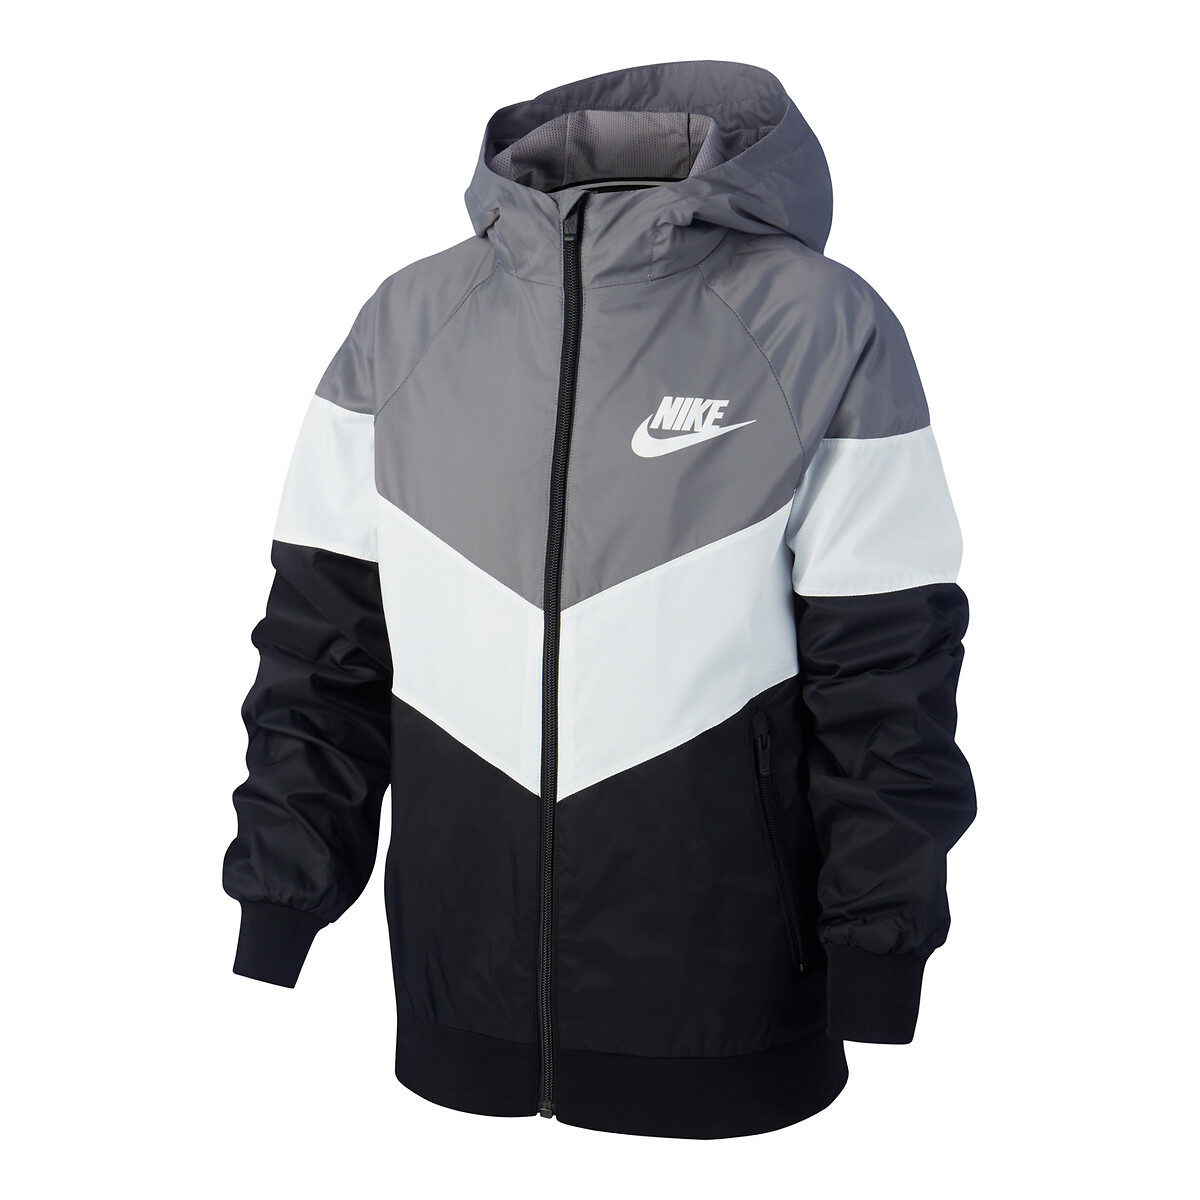 Windrunner jacket, 6-16 years , multi-coloured, Nike | La Redoute